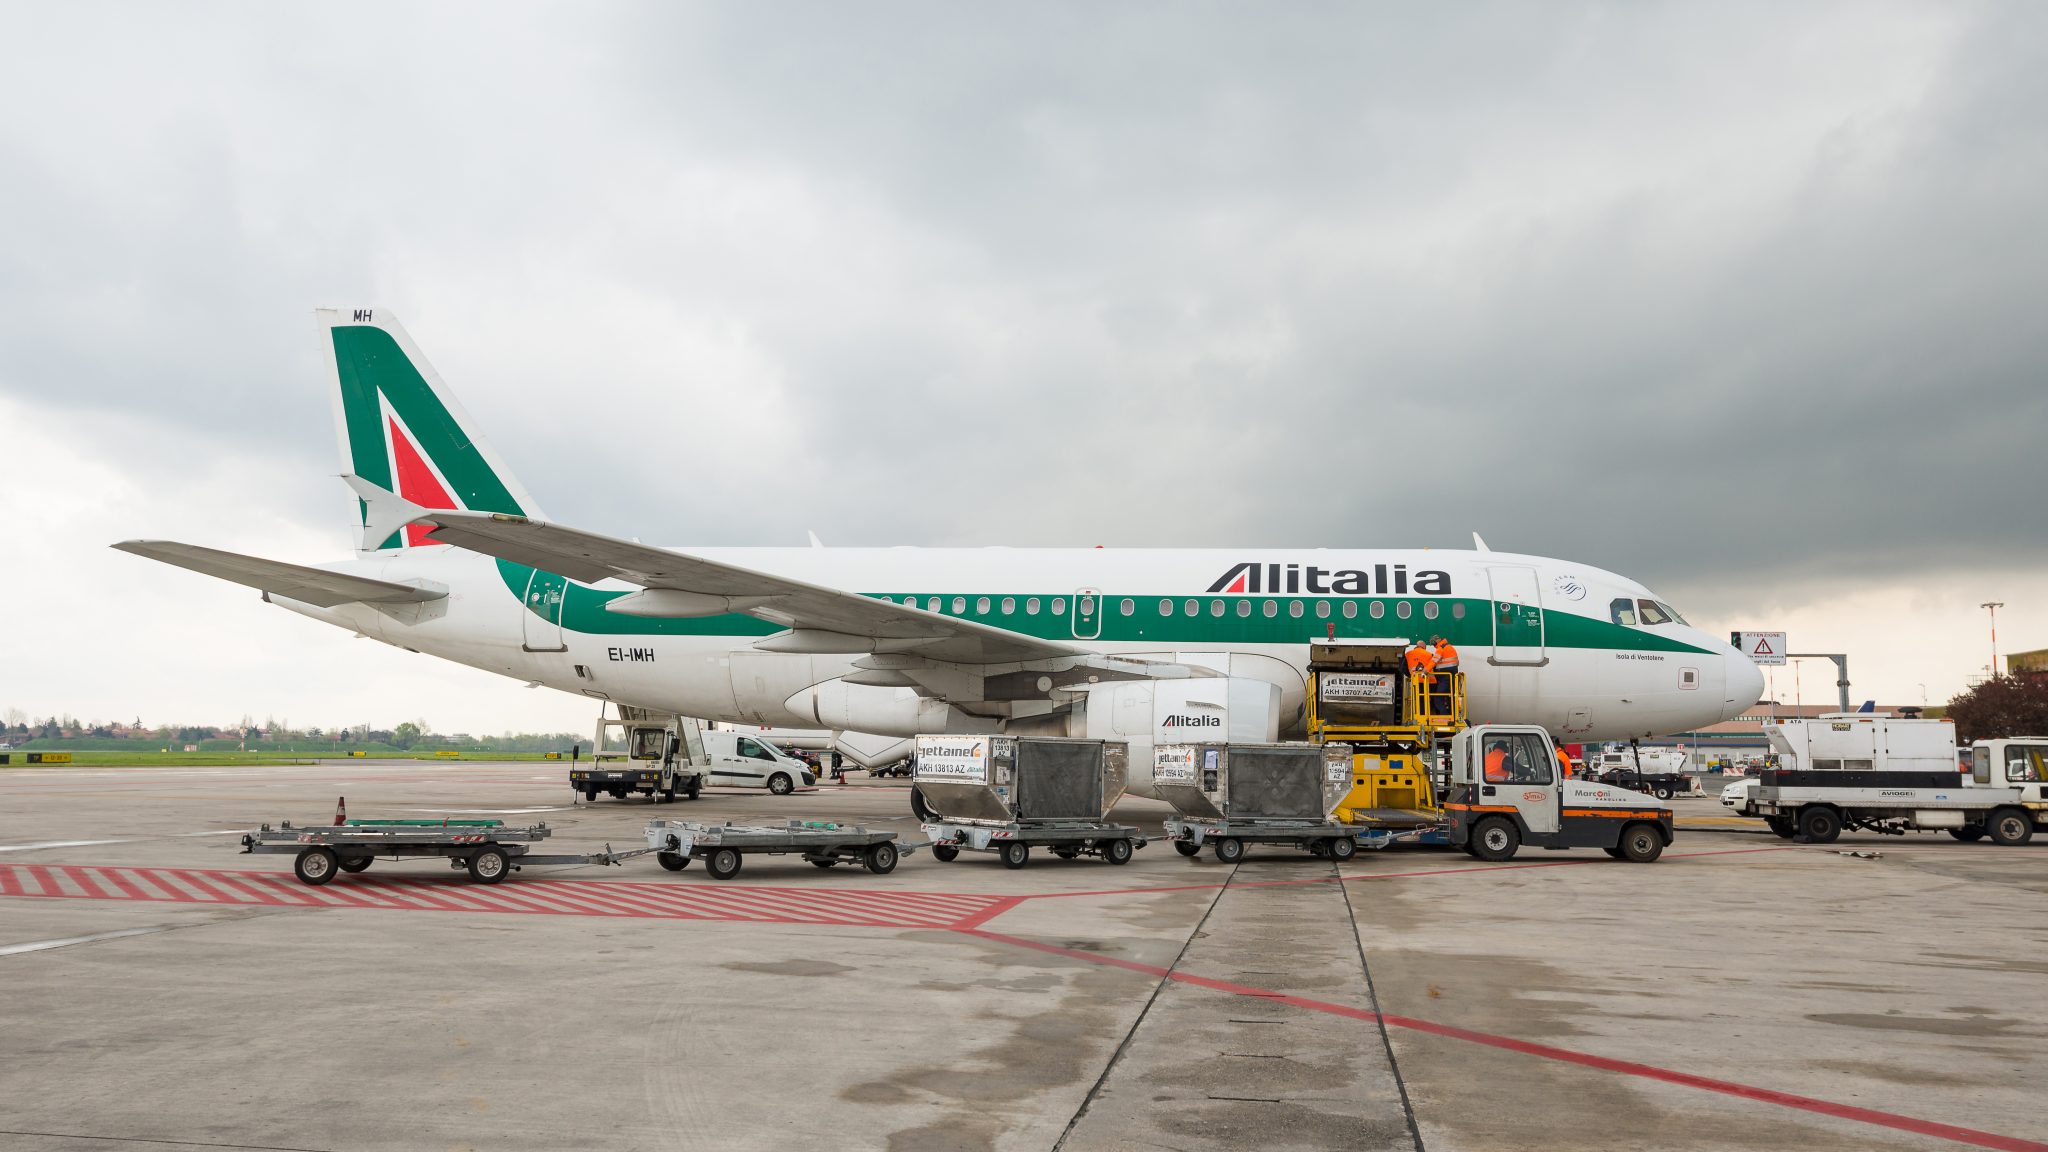 Ryanair to bid for 90 Alitalia aircraft